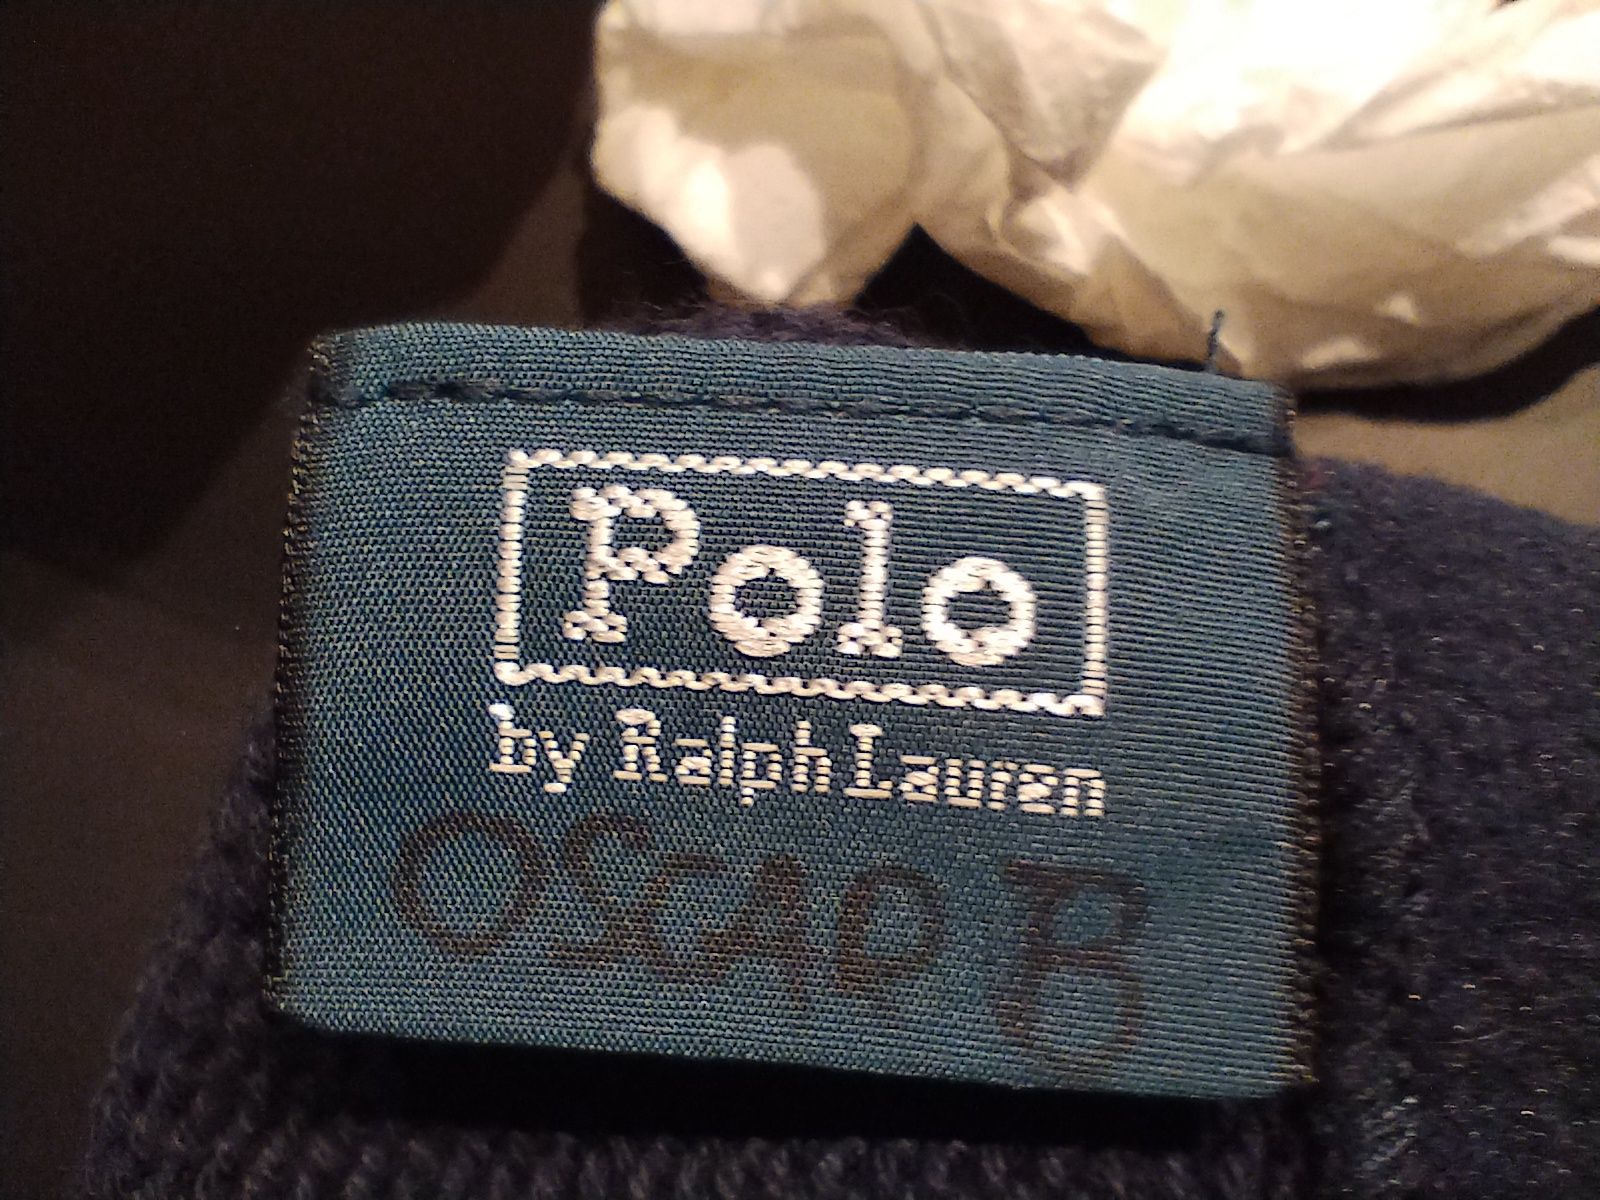 Czapka Ralph Lauren  zimowa sportowa Piękne Haftowane logo